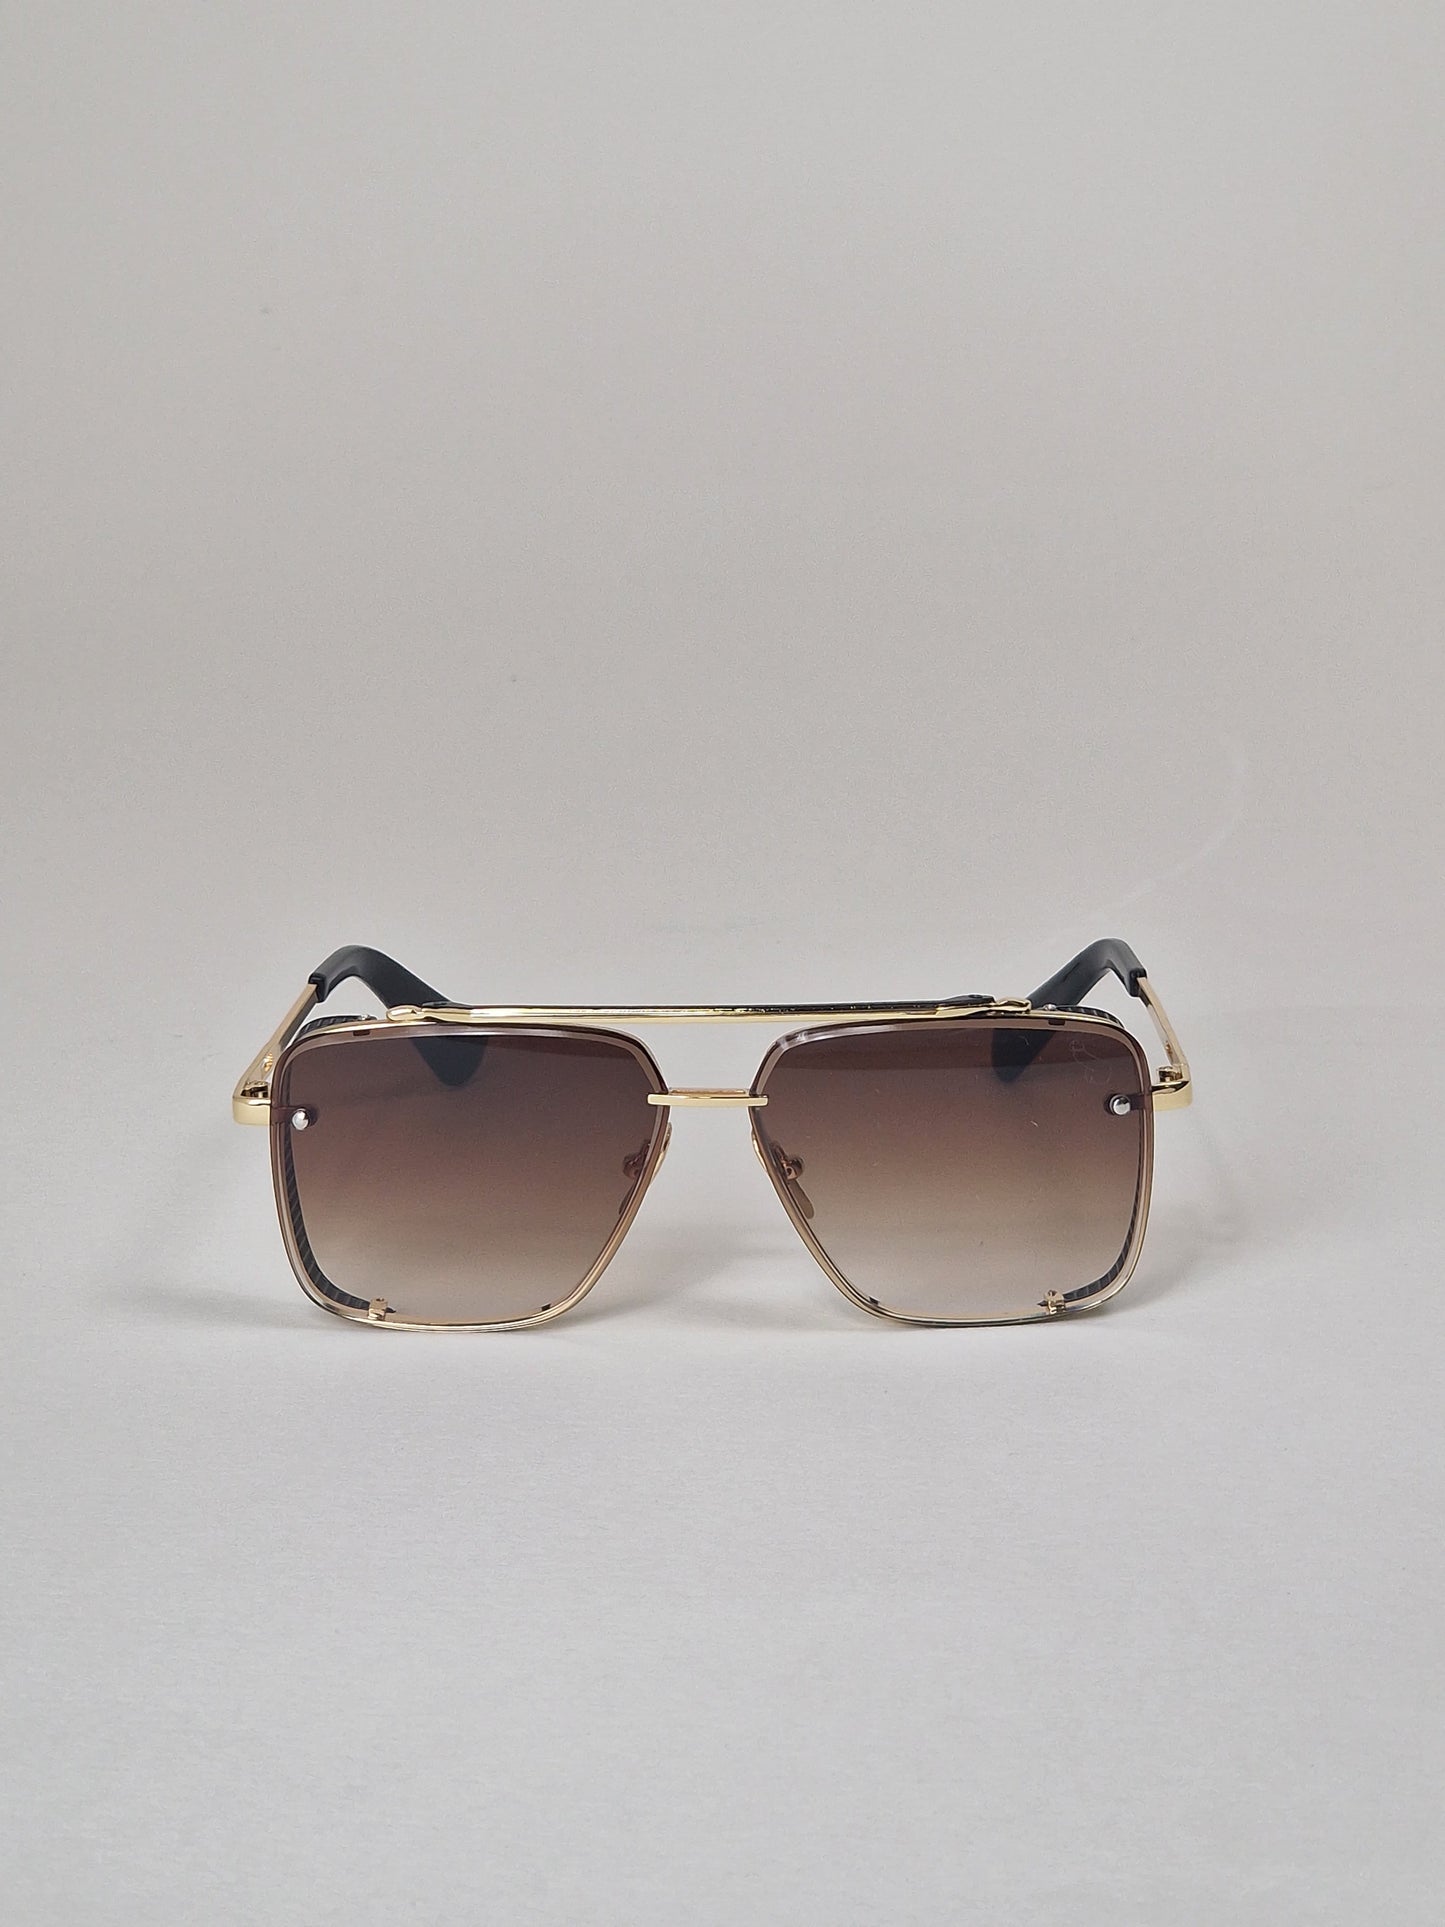 Sunglasses, model 32 - Brown tinted.